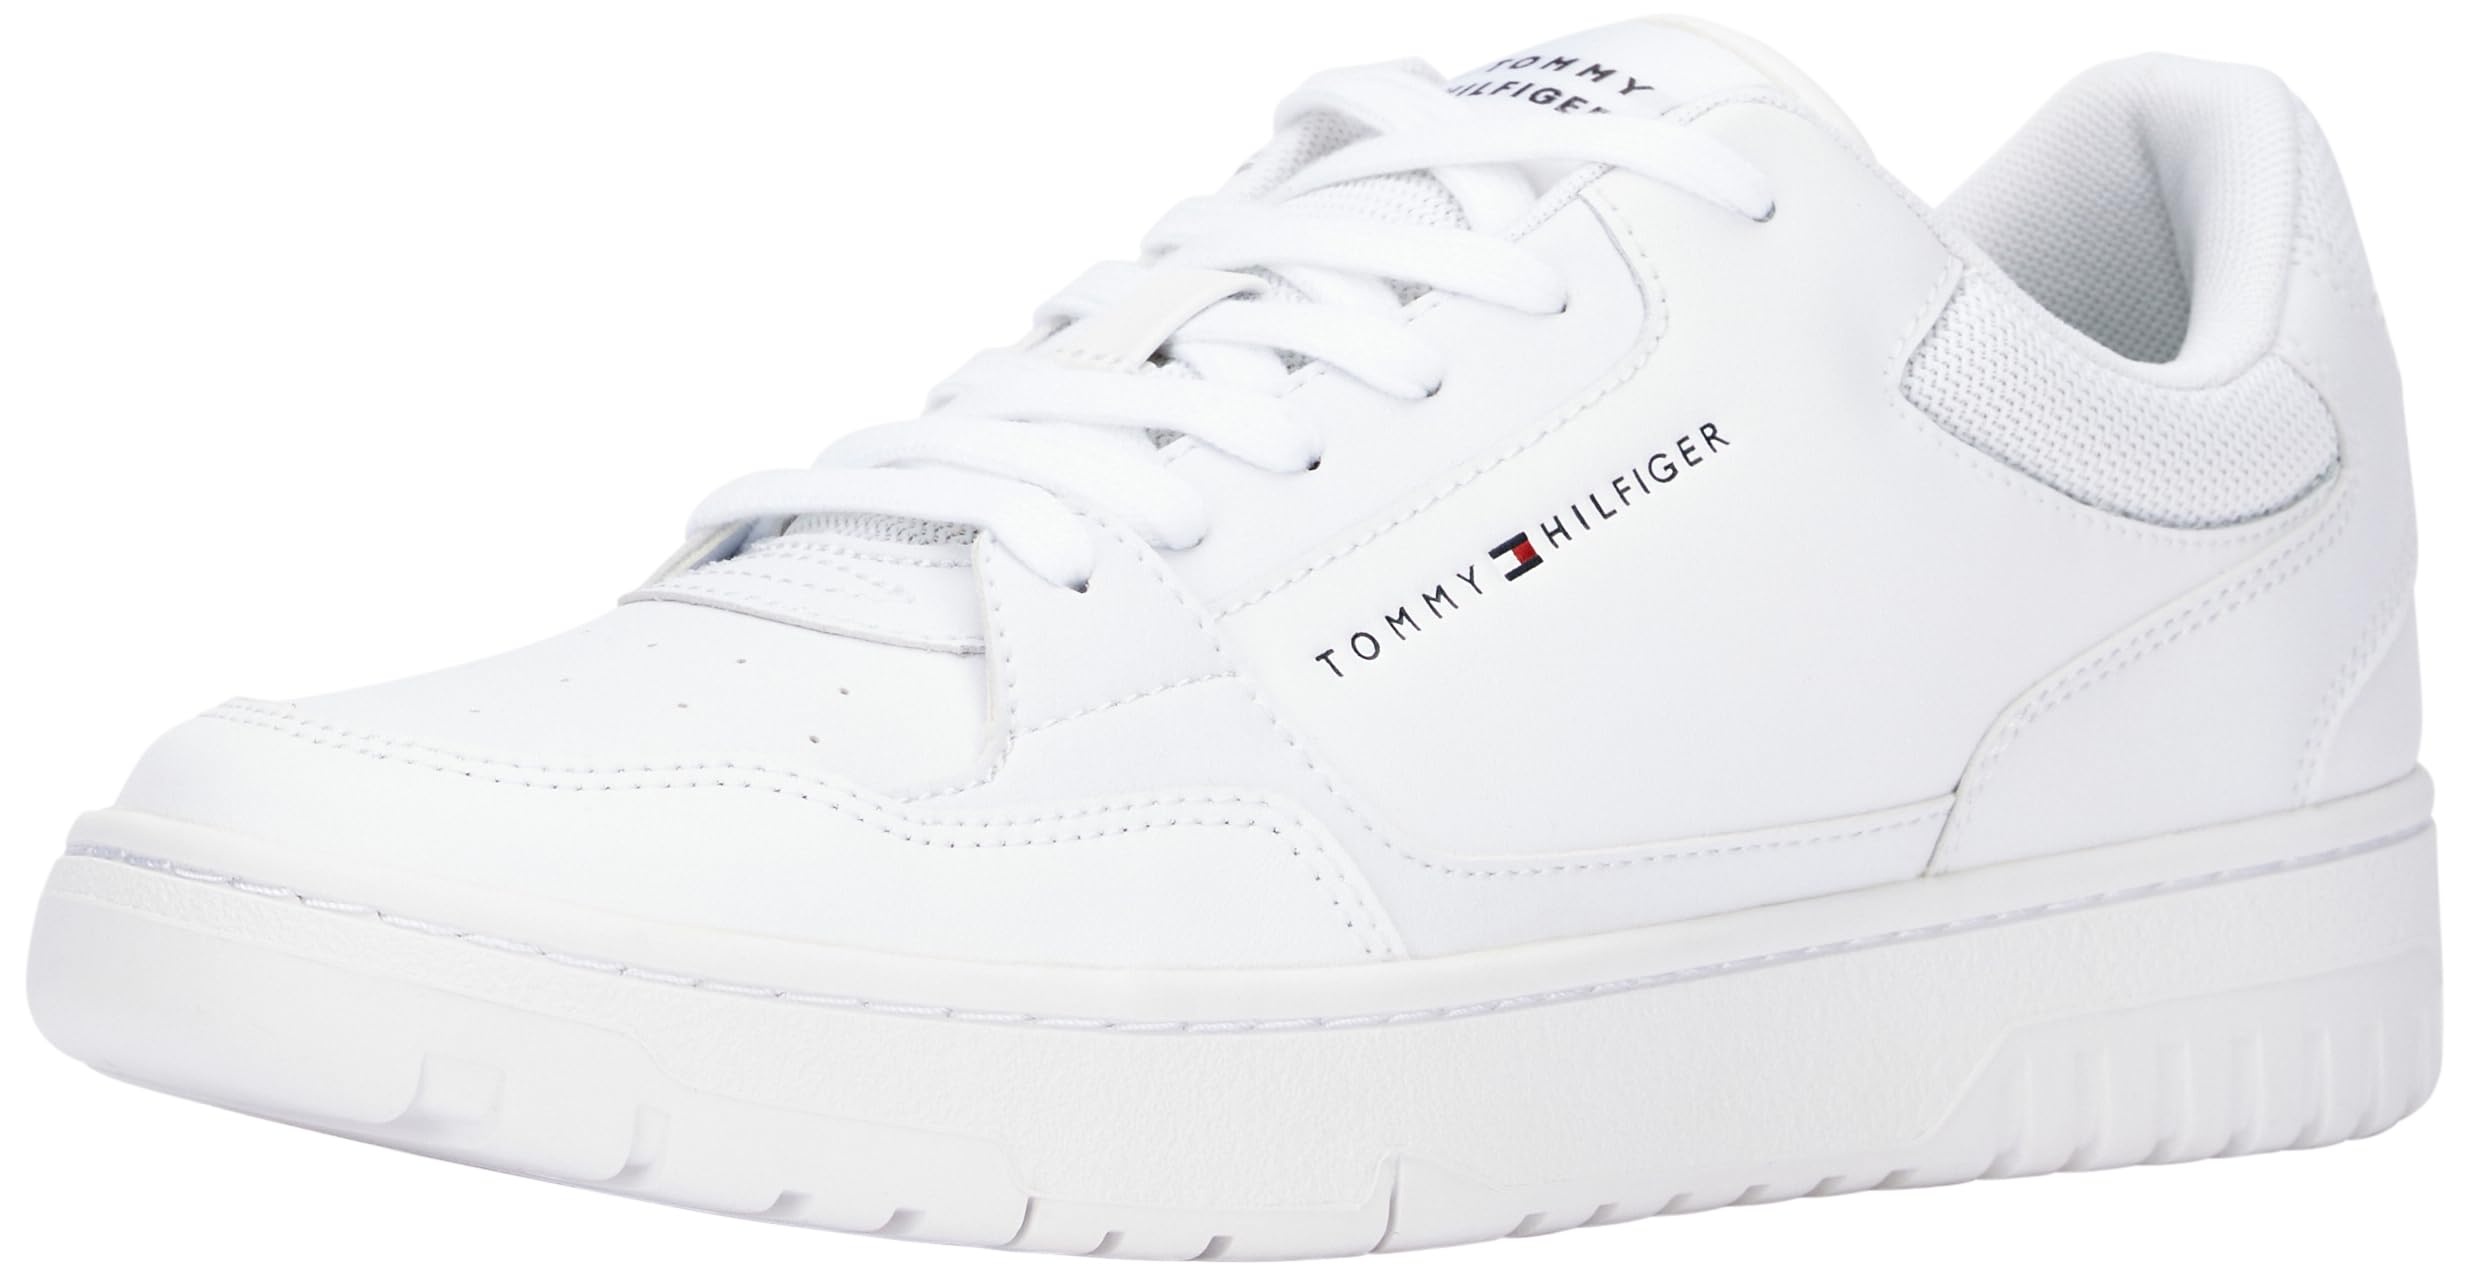 Tommy Hilfiger Herren Cupsole Sneaker Basket Core Leather Schuhe, Weiß (White), 40 EU